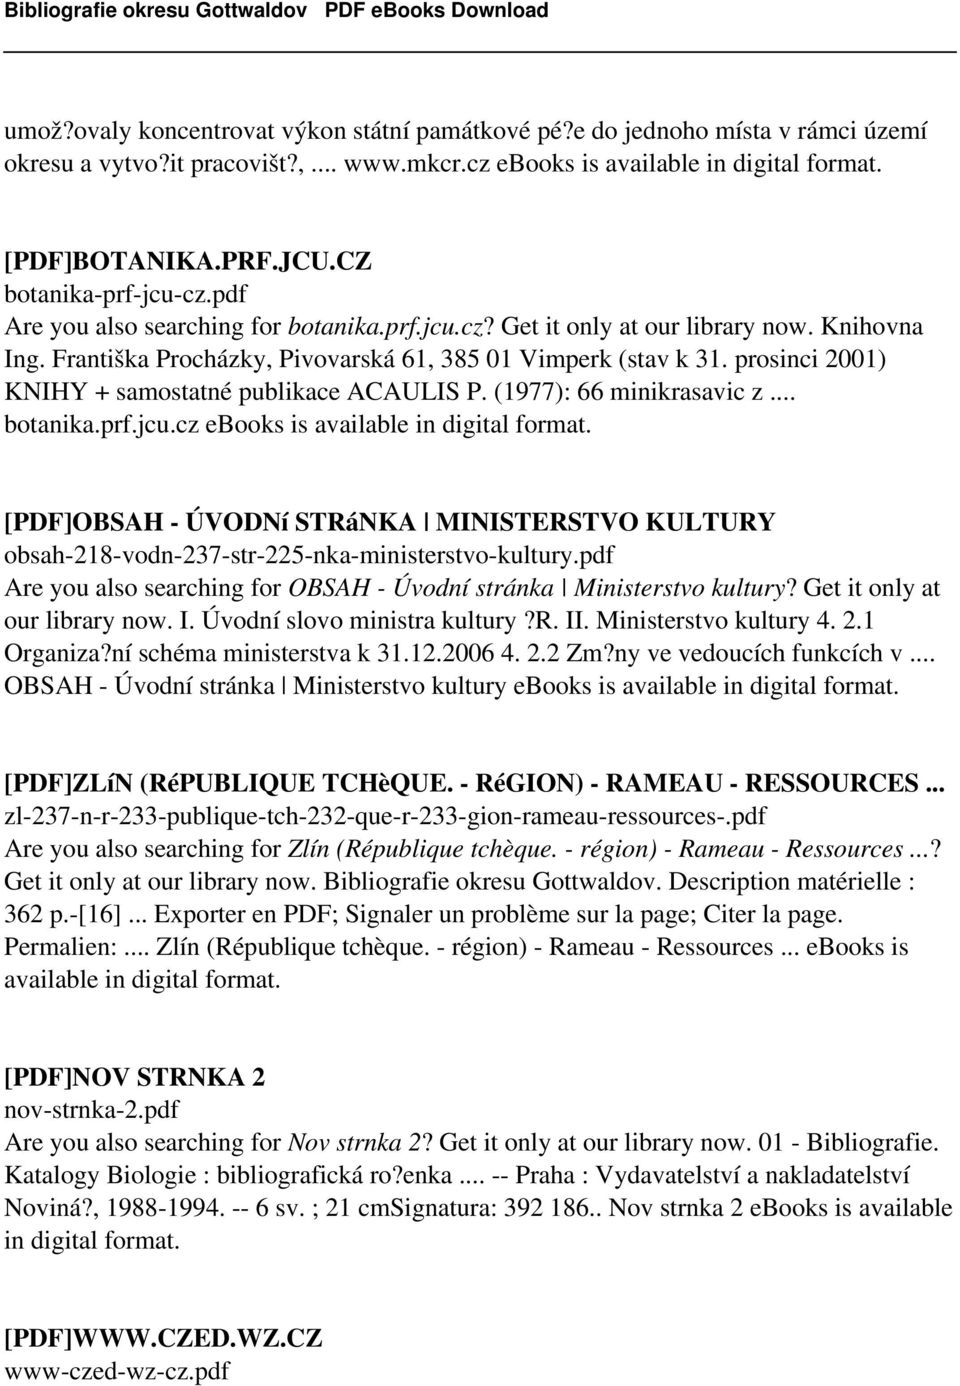 prosinci 2001) KNIHY + samostatné publikace ACAULIS P. (1977): 66 minikrasavic z... botanika.prf.jcu.